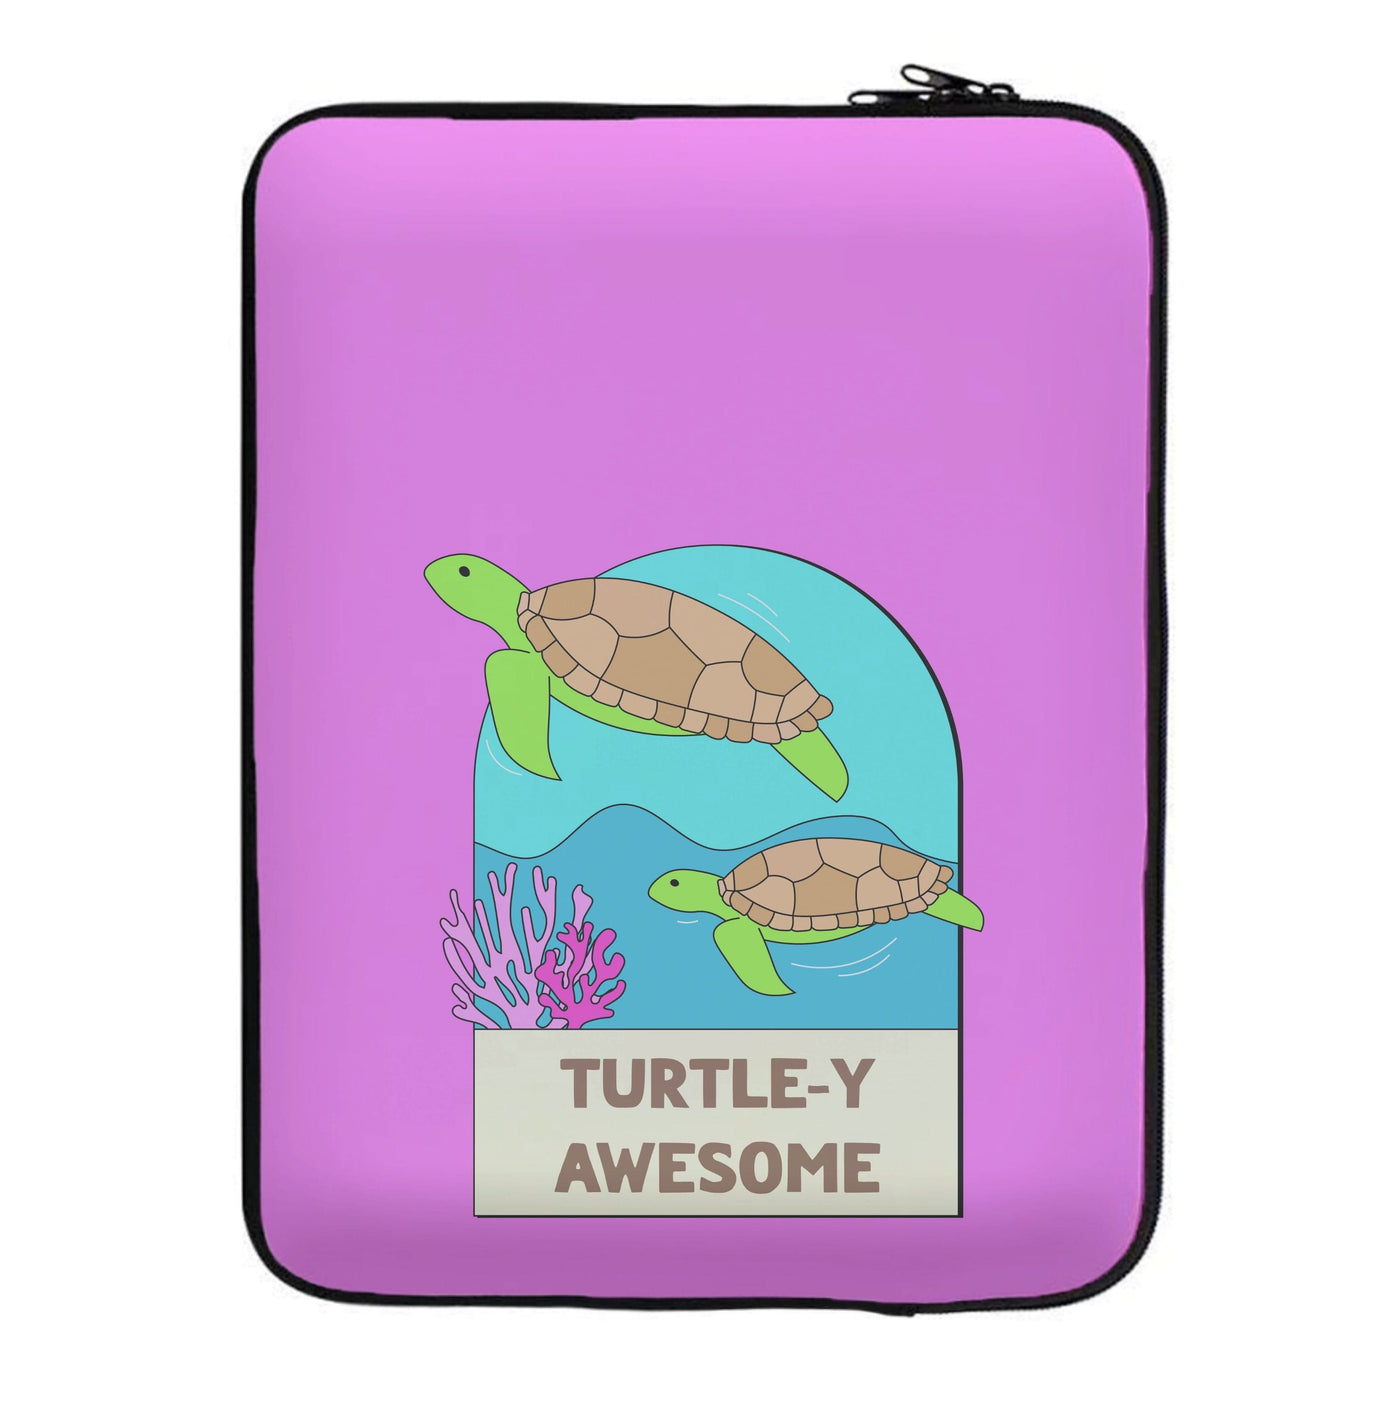 Turtle-y Awesome - Sealife Laptop Sleeve